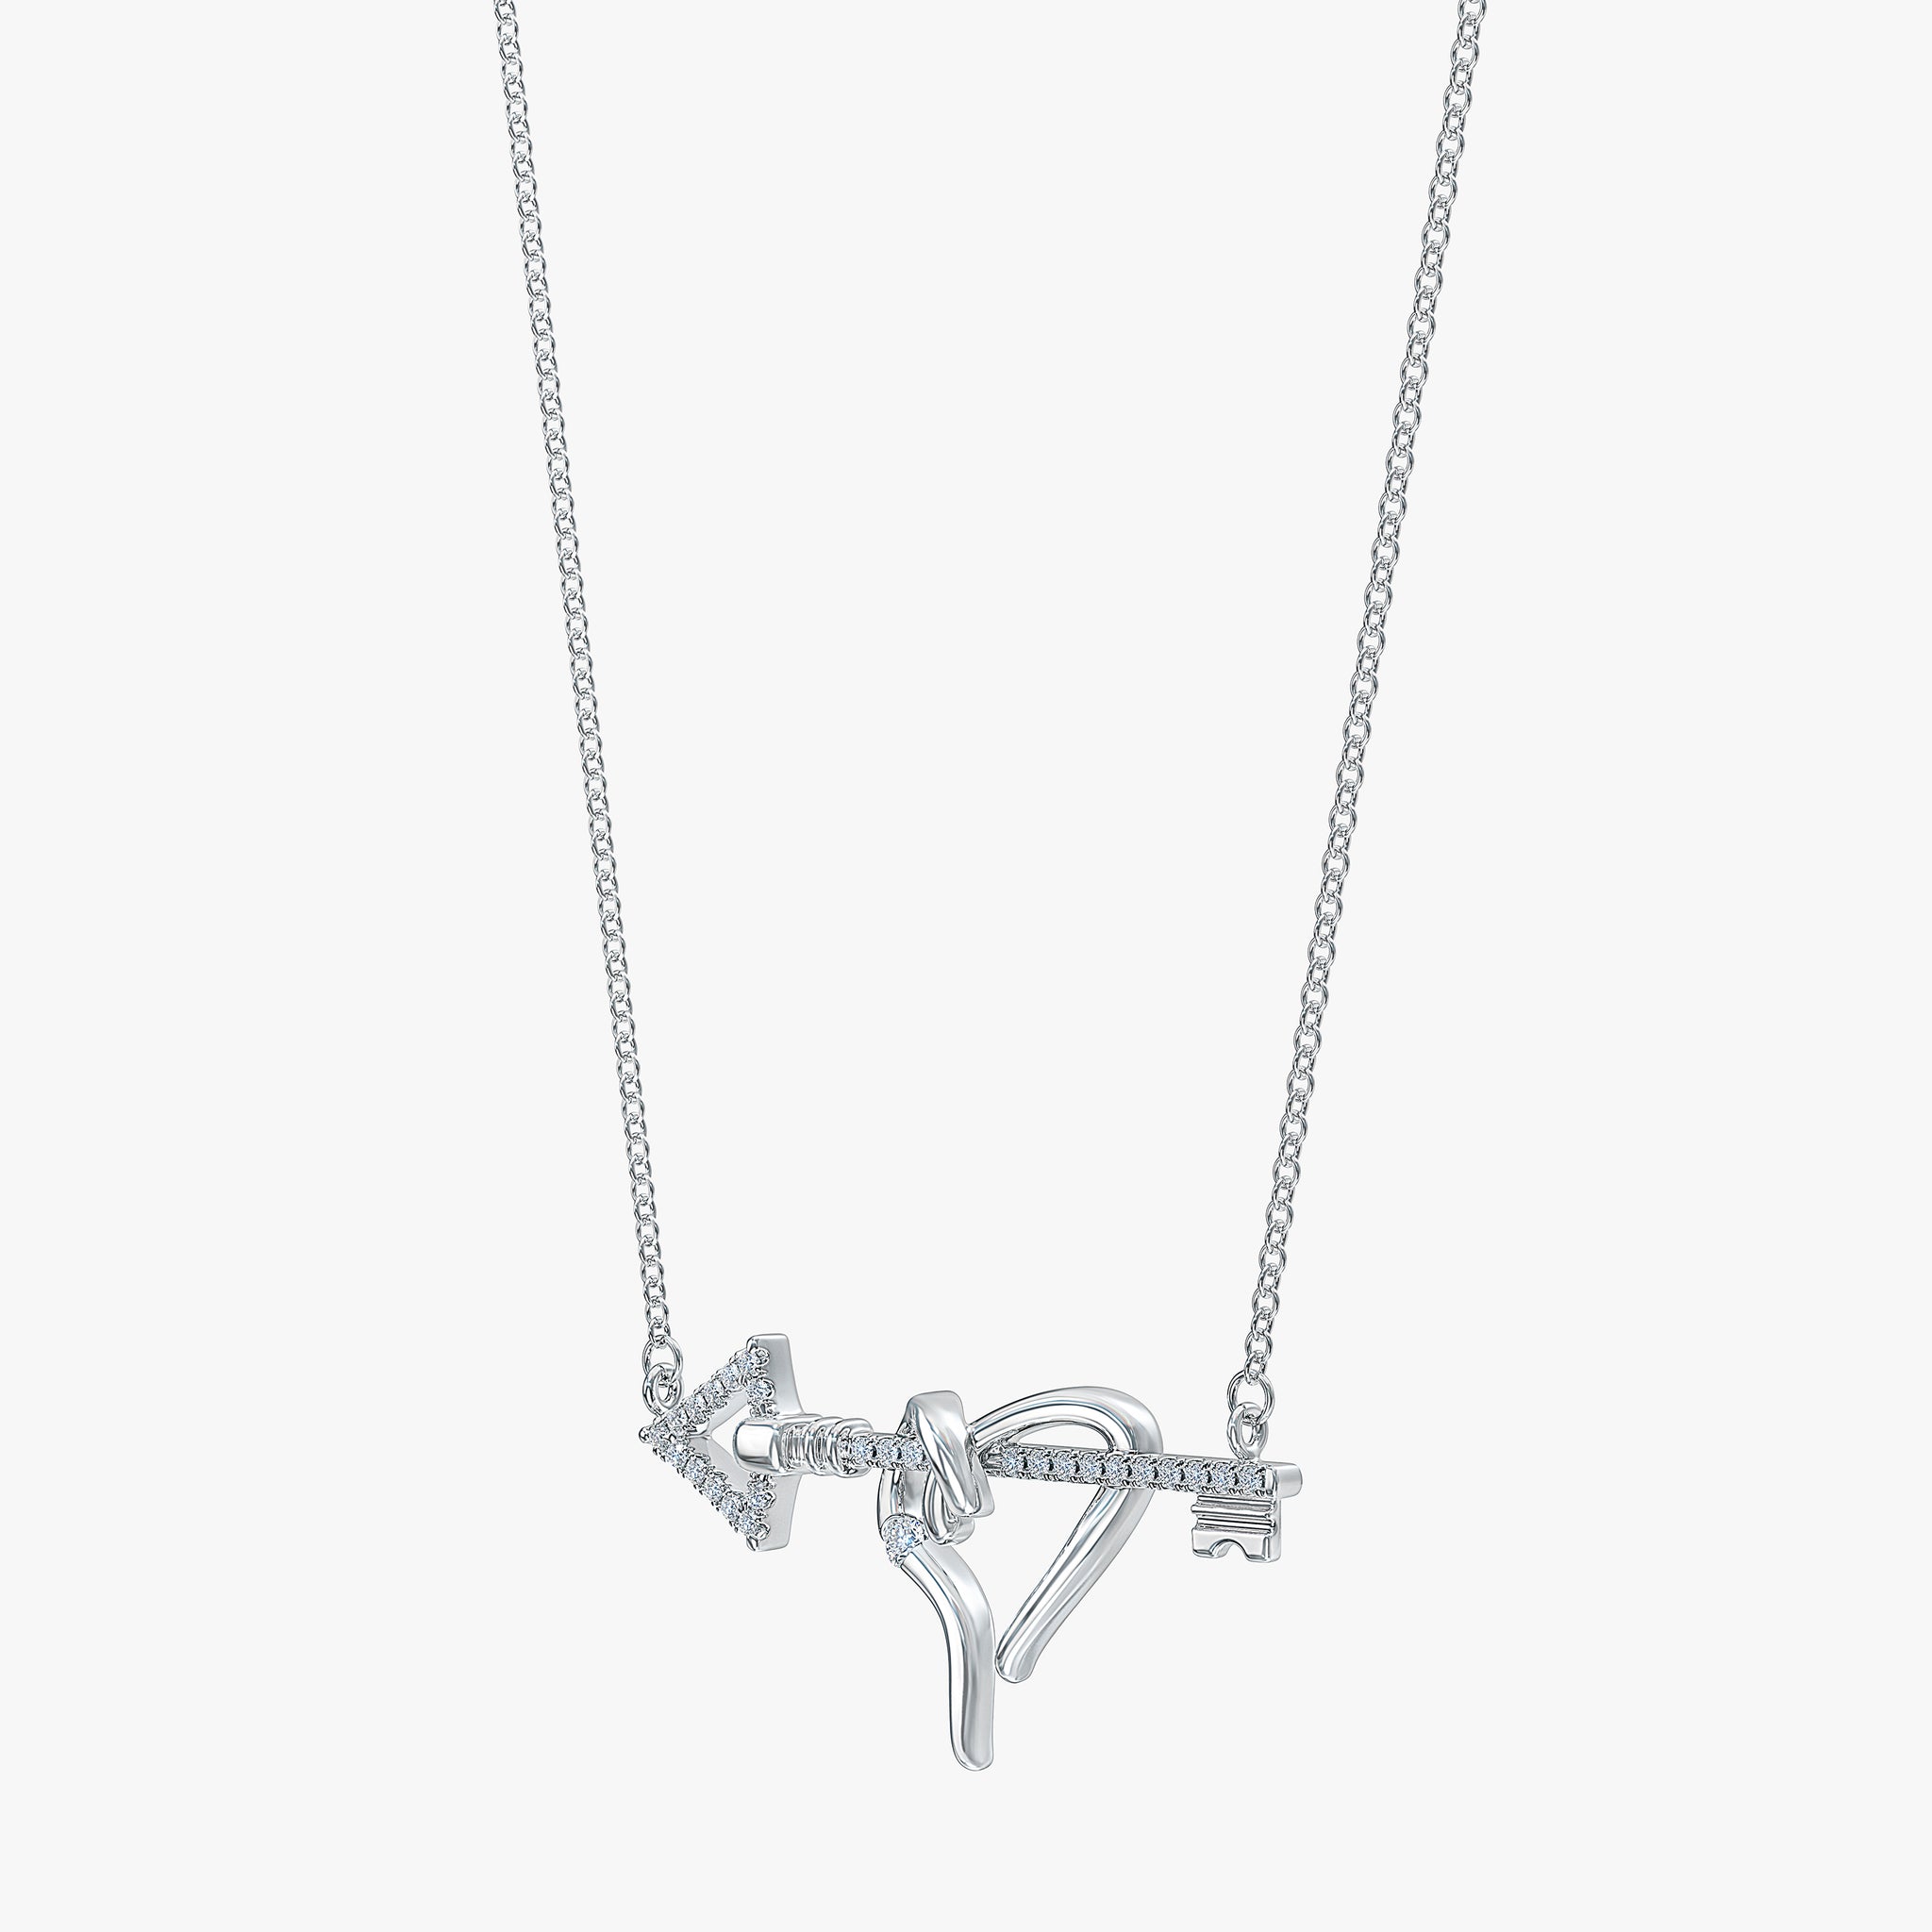 J'EVAR 14KT White Gold Heart & Arrow Key ALTR Lab Grown Diamond Necklace Lock View